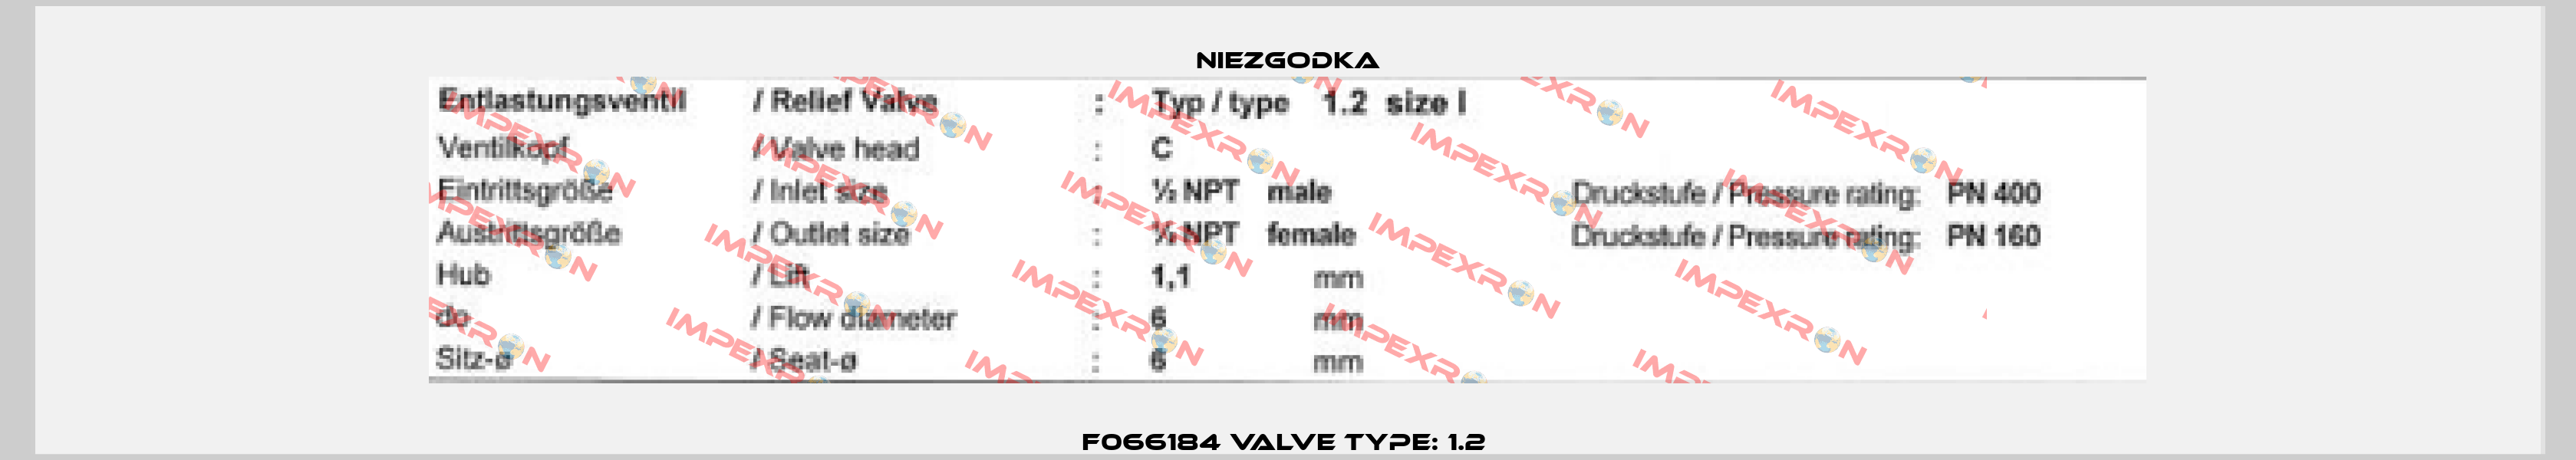 F066184 Valve type: 1.2  Niezgodka